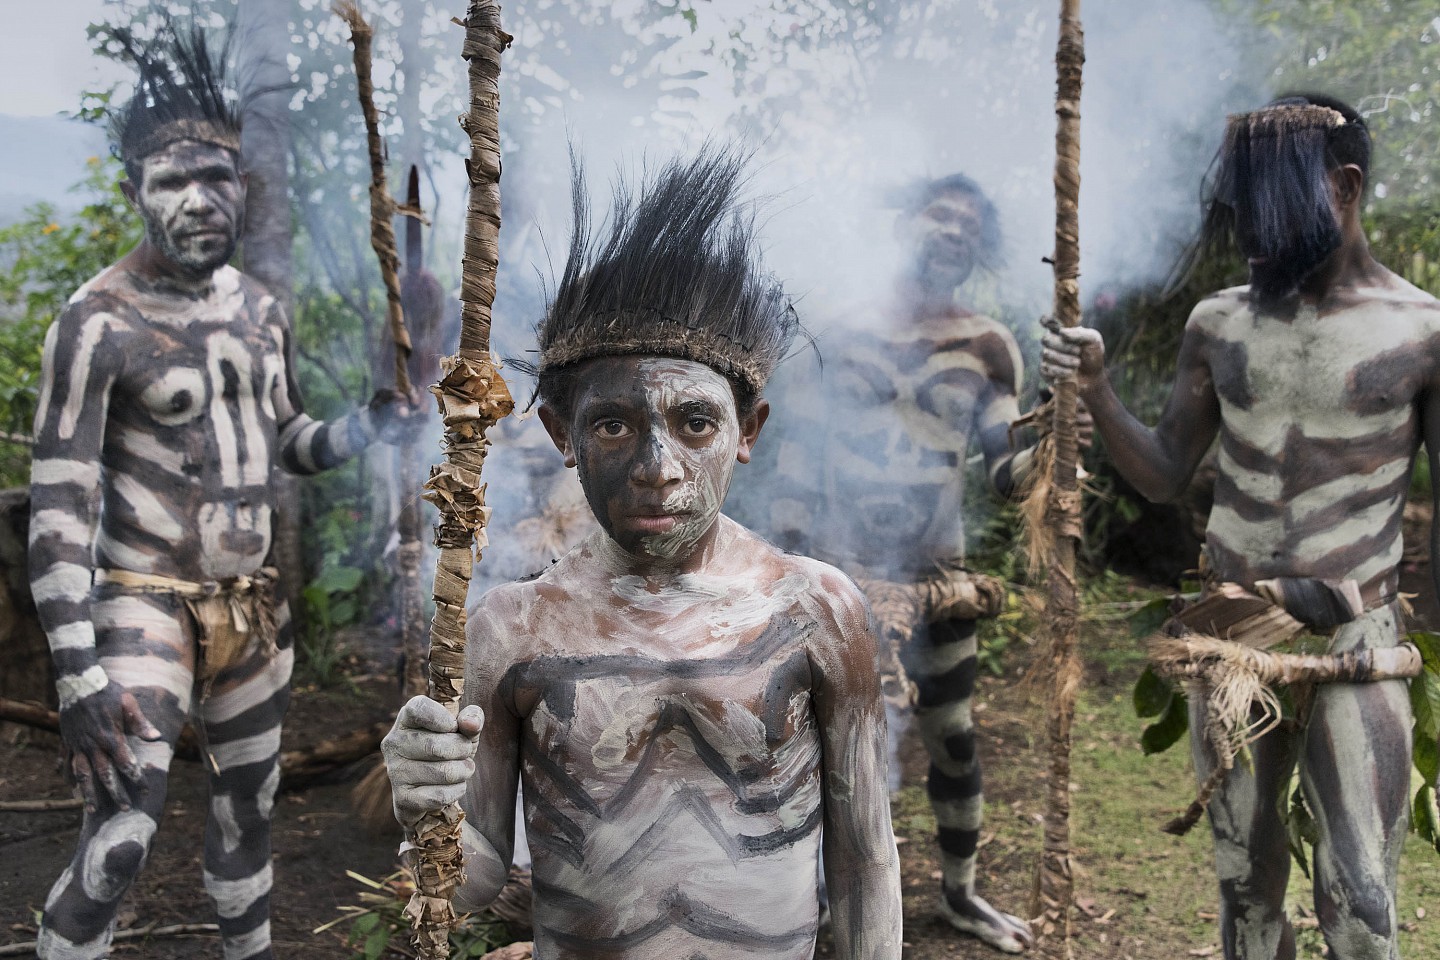 Steve McCurry, The Himakauve Tribe, Papua New Guinea, 2017
FujiFlex Crystal Archive Print, 30 x 40 in. (76.2 x 101.6 cm)
10019